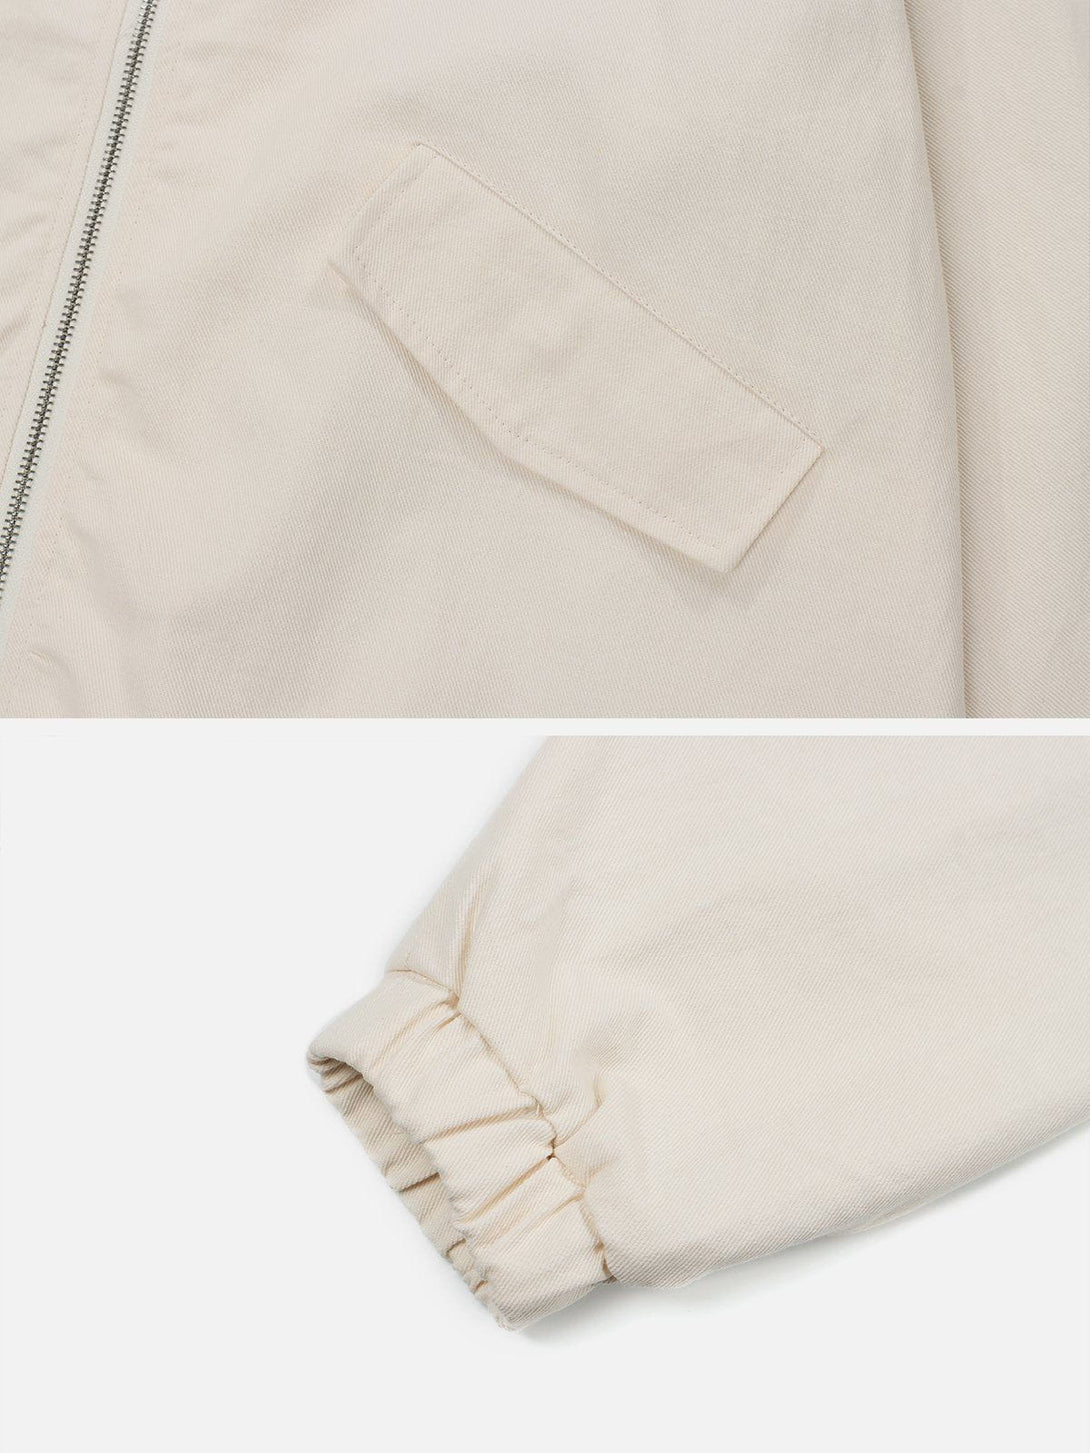 Levefly - "BNL" Embroidery Jacket - Streetwear Fashion - levefly.com